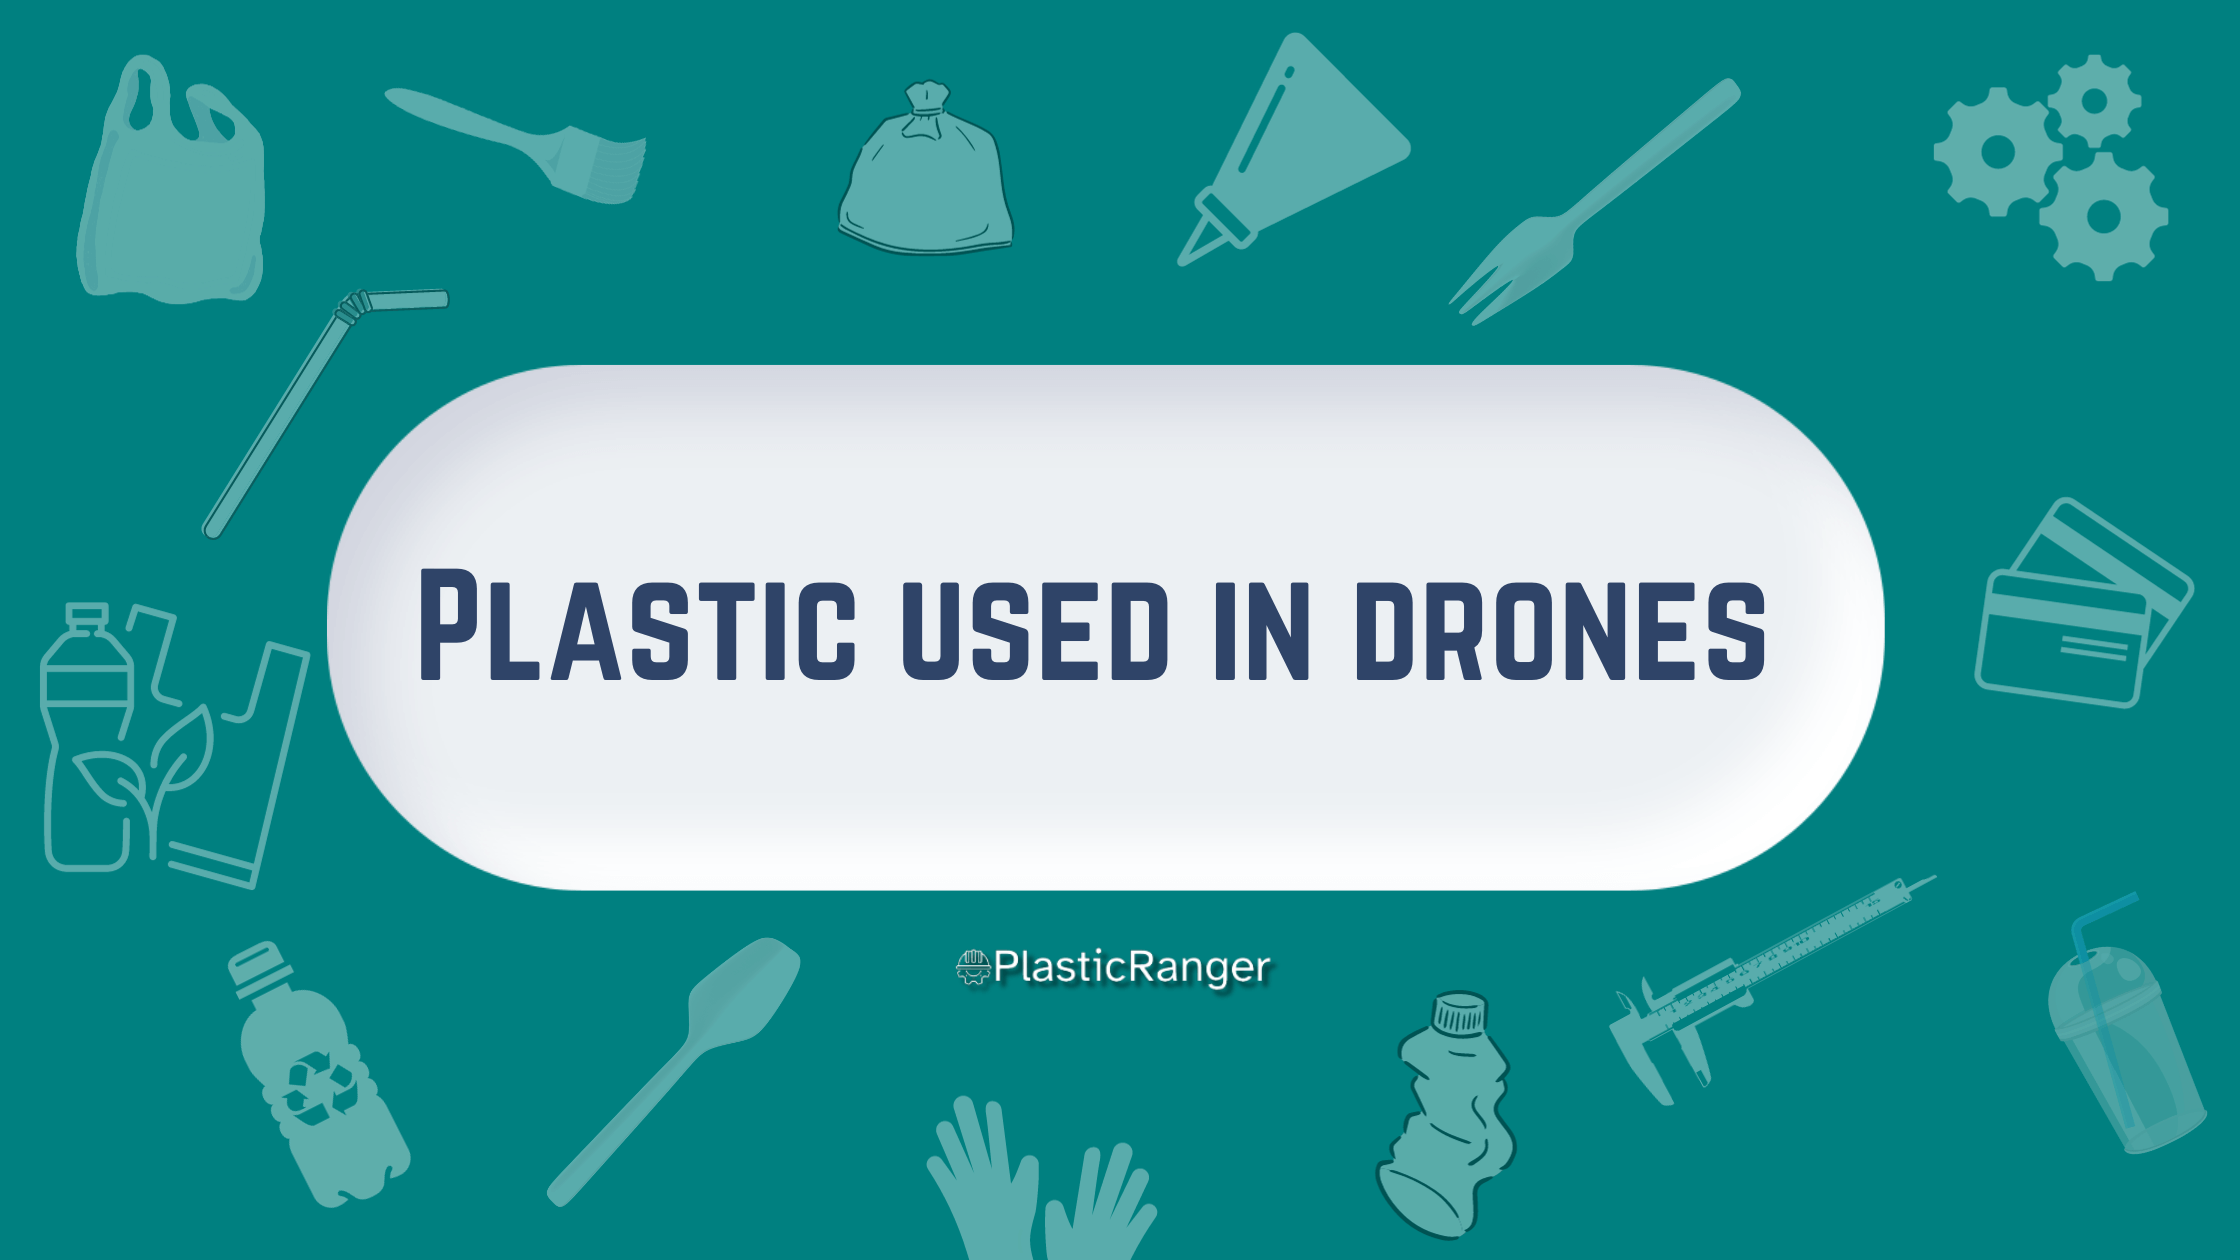 PLASTIC USED IN DRONES